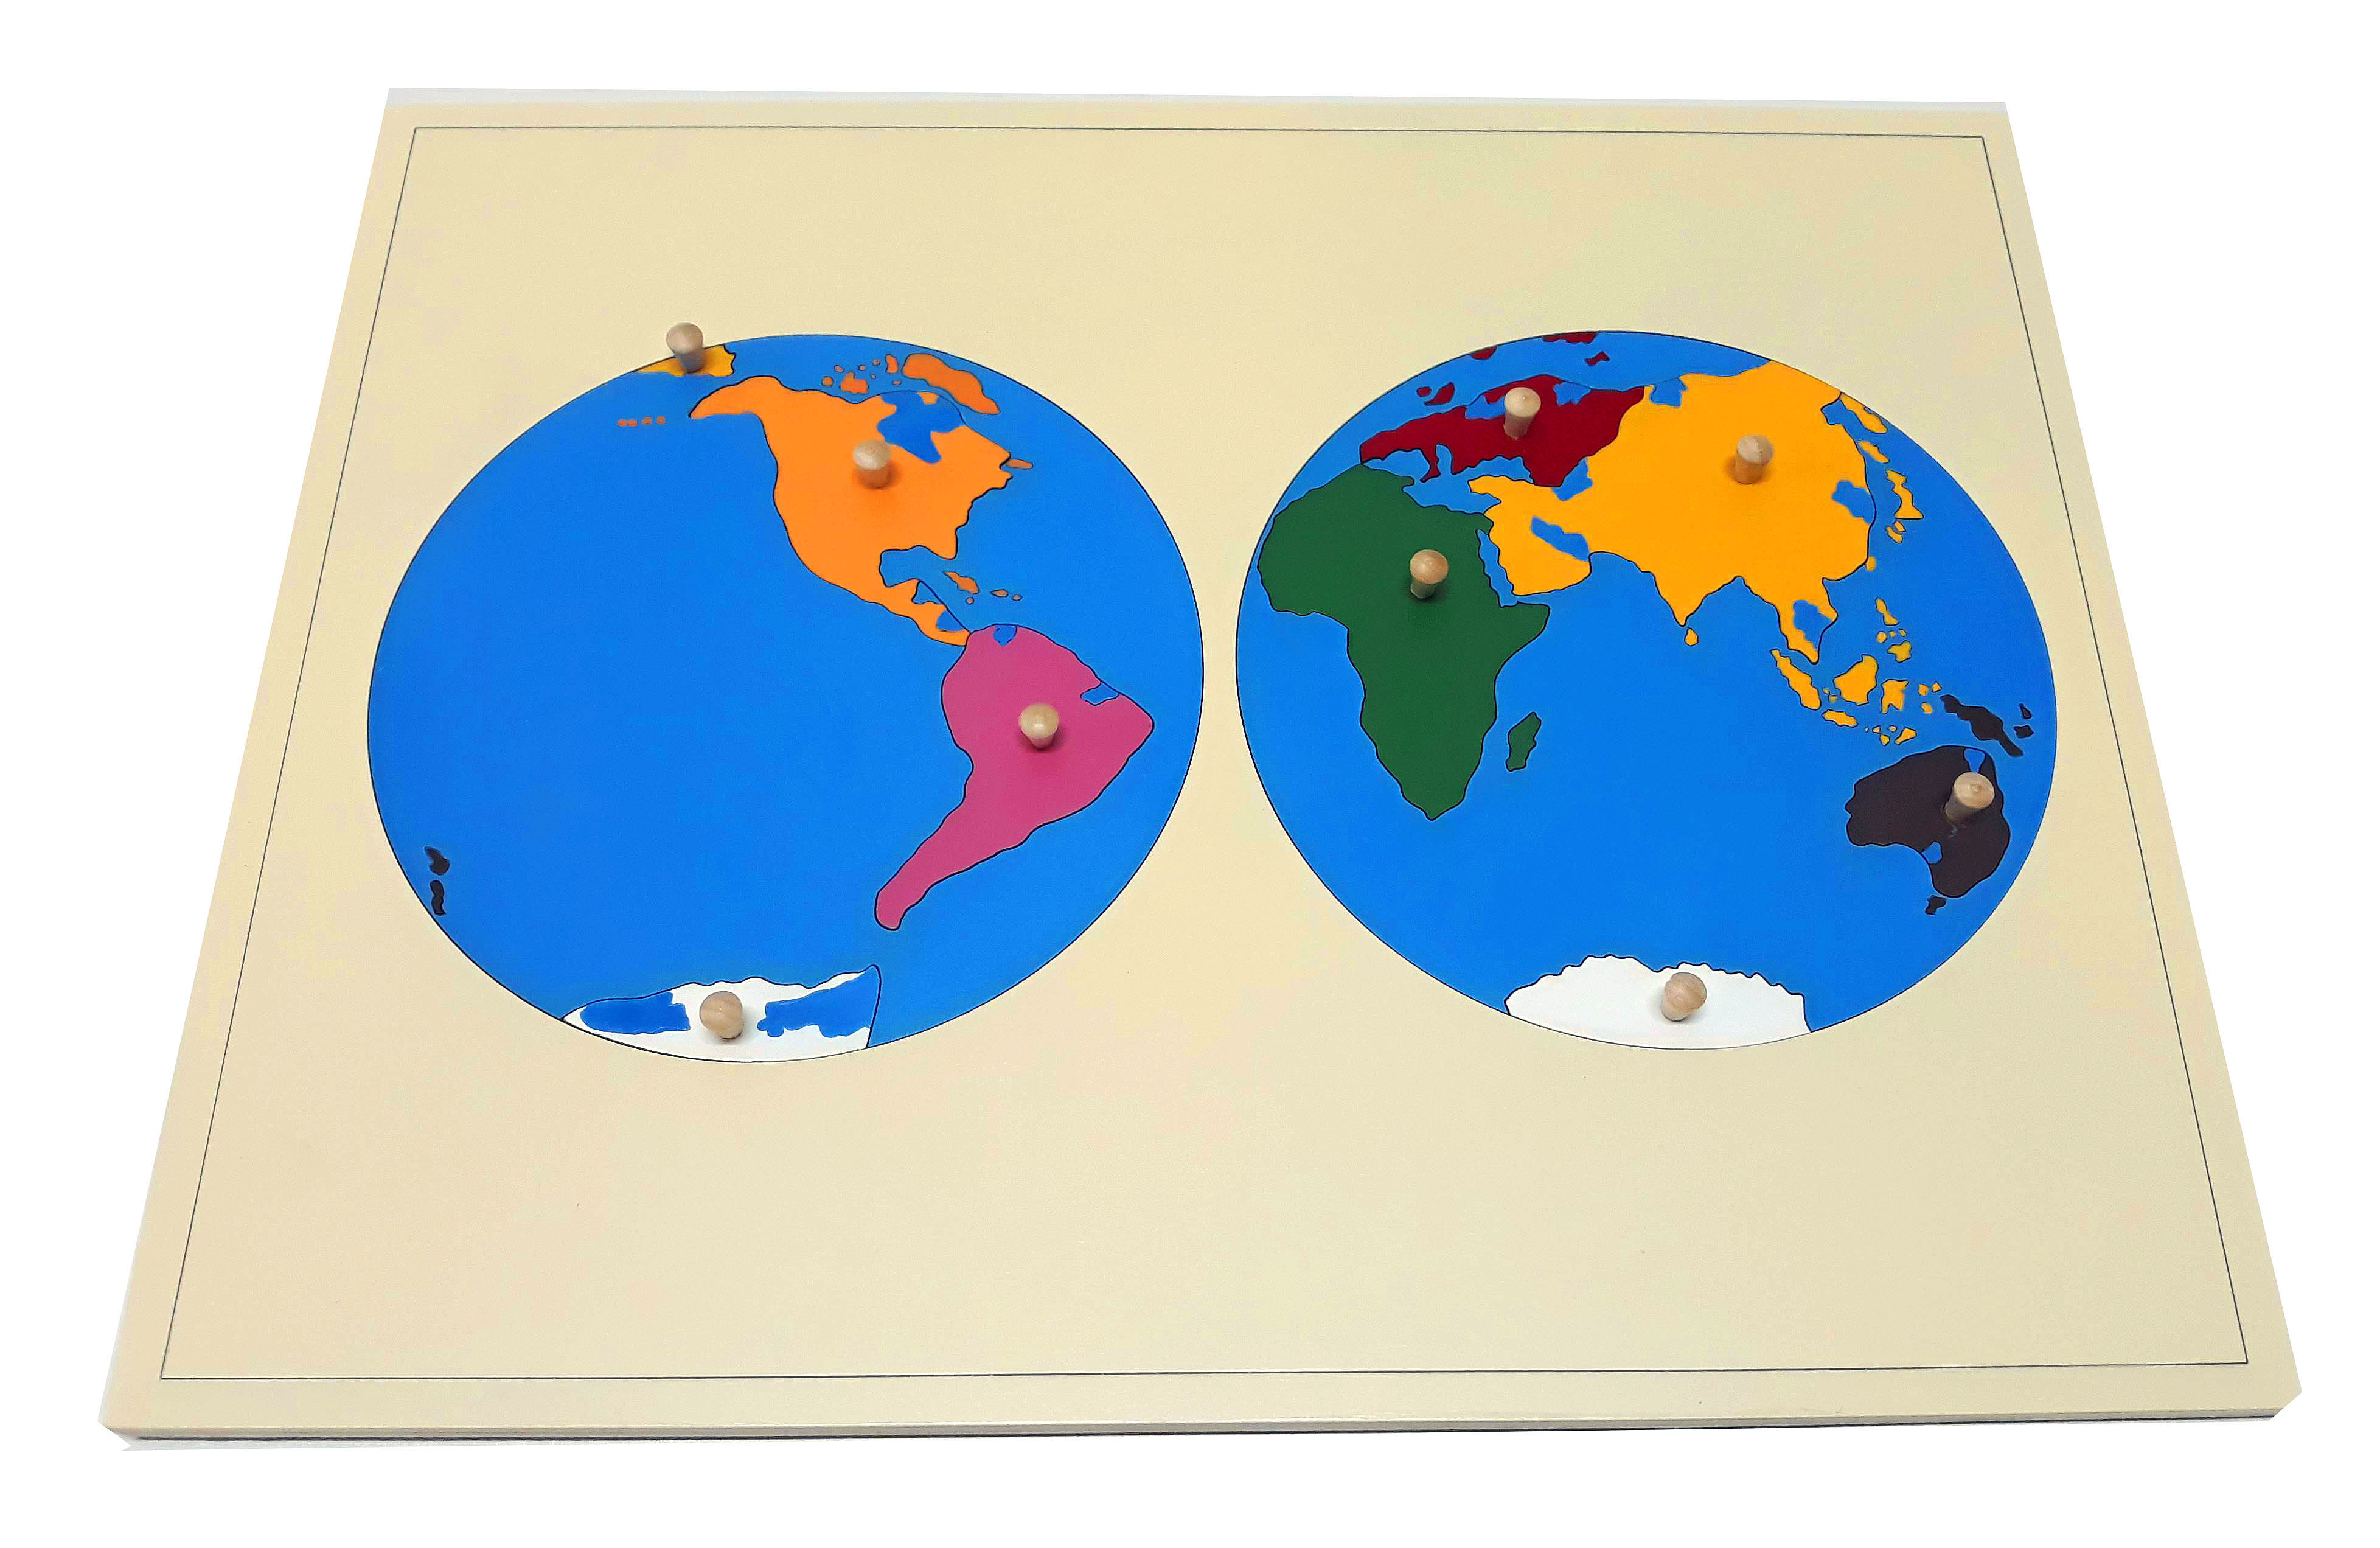 Harta puzzle pentru acasa - harta lumii